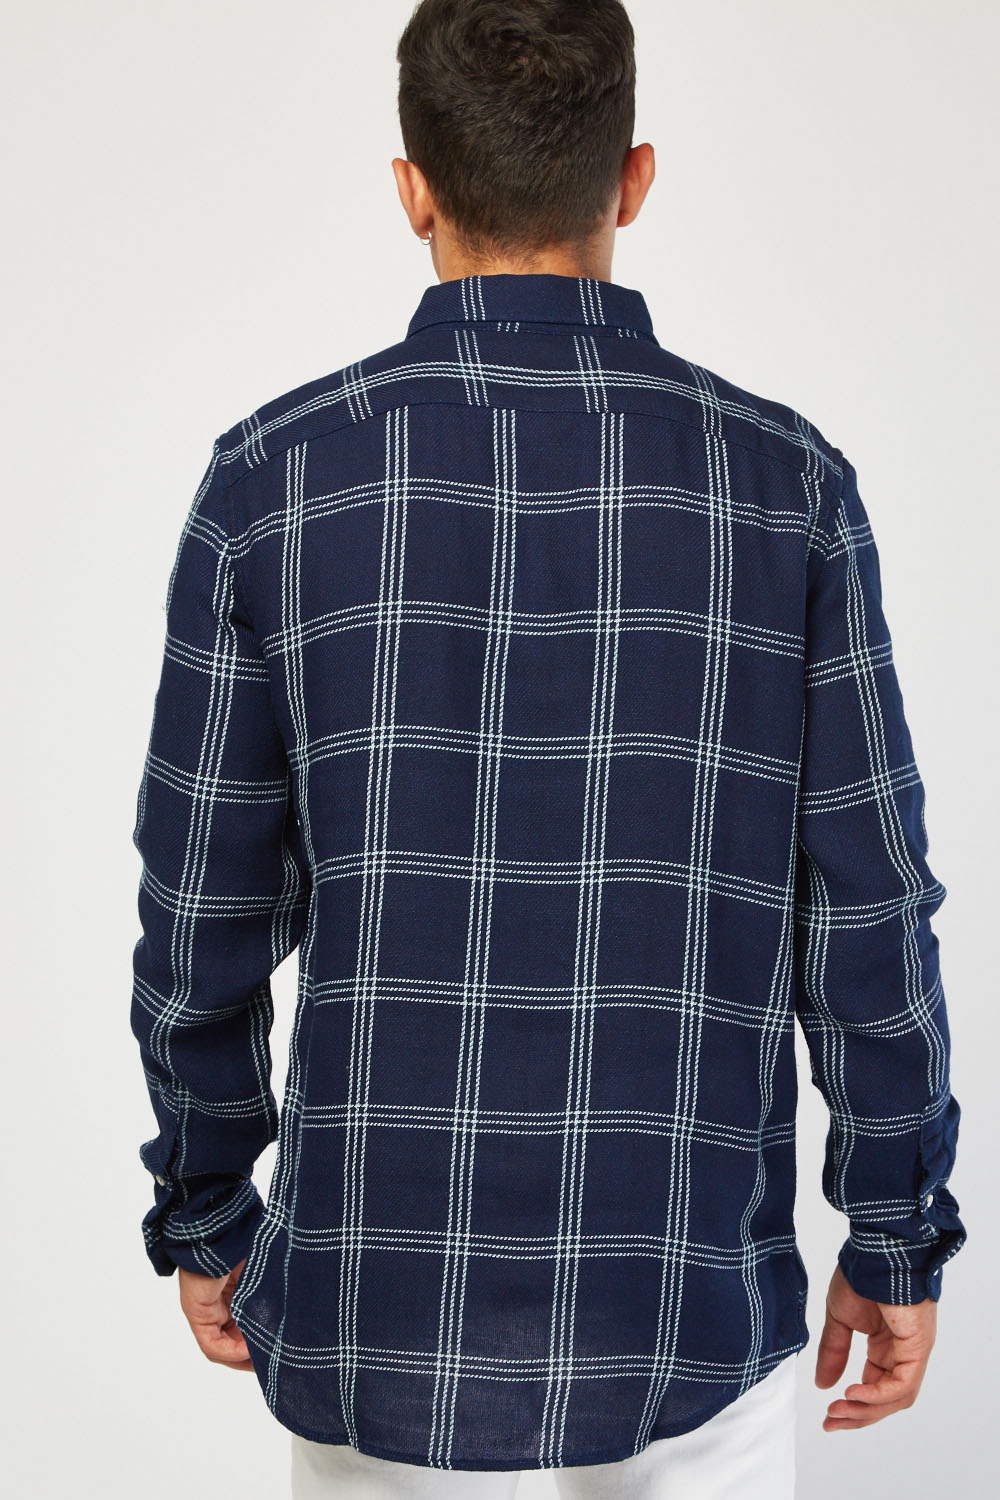 Casual Windowpane Flannel Shirt - Just $7